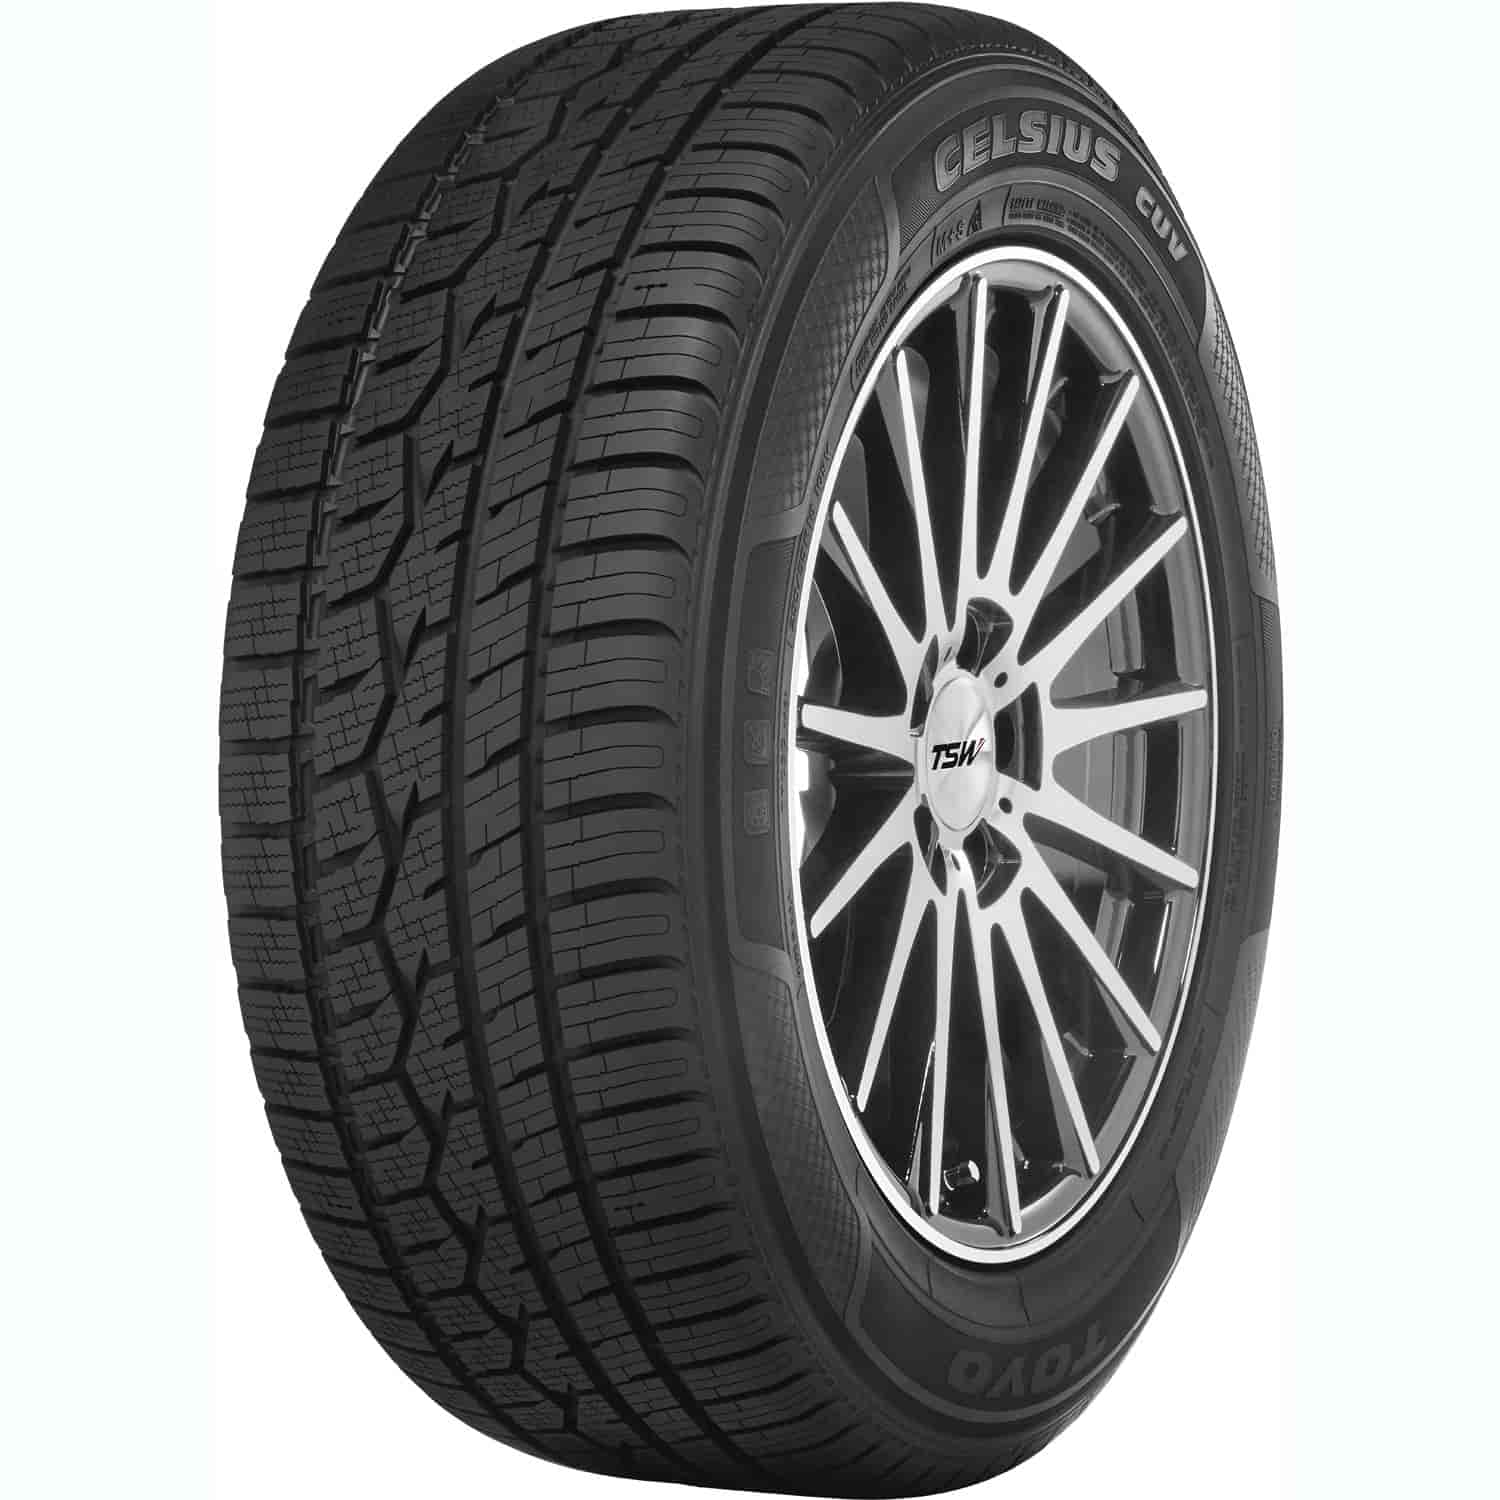 Celsius CUV Tire 275/65R18